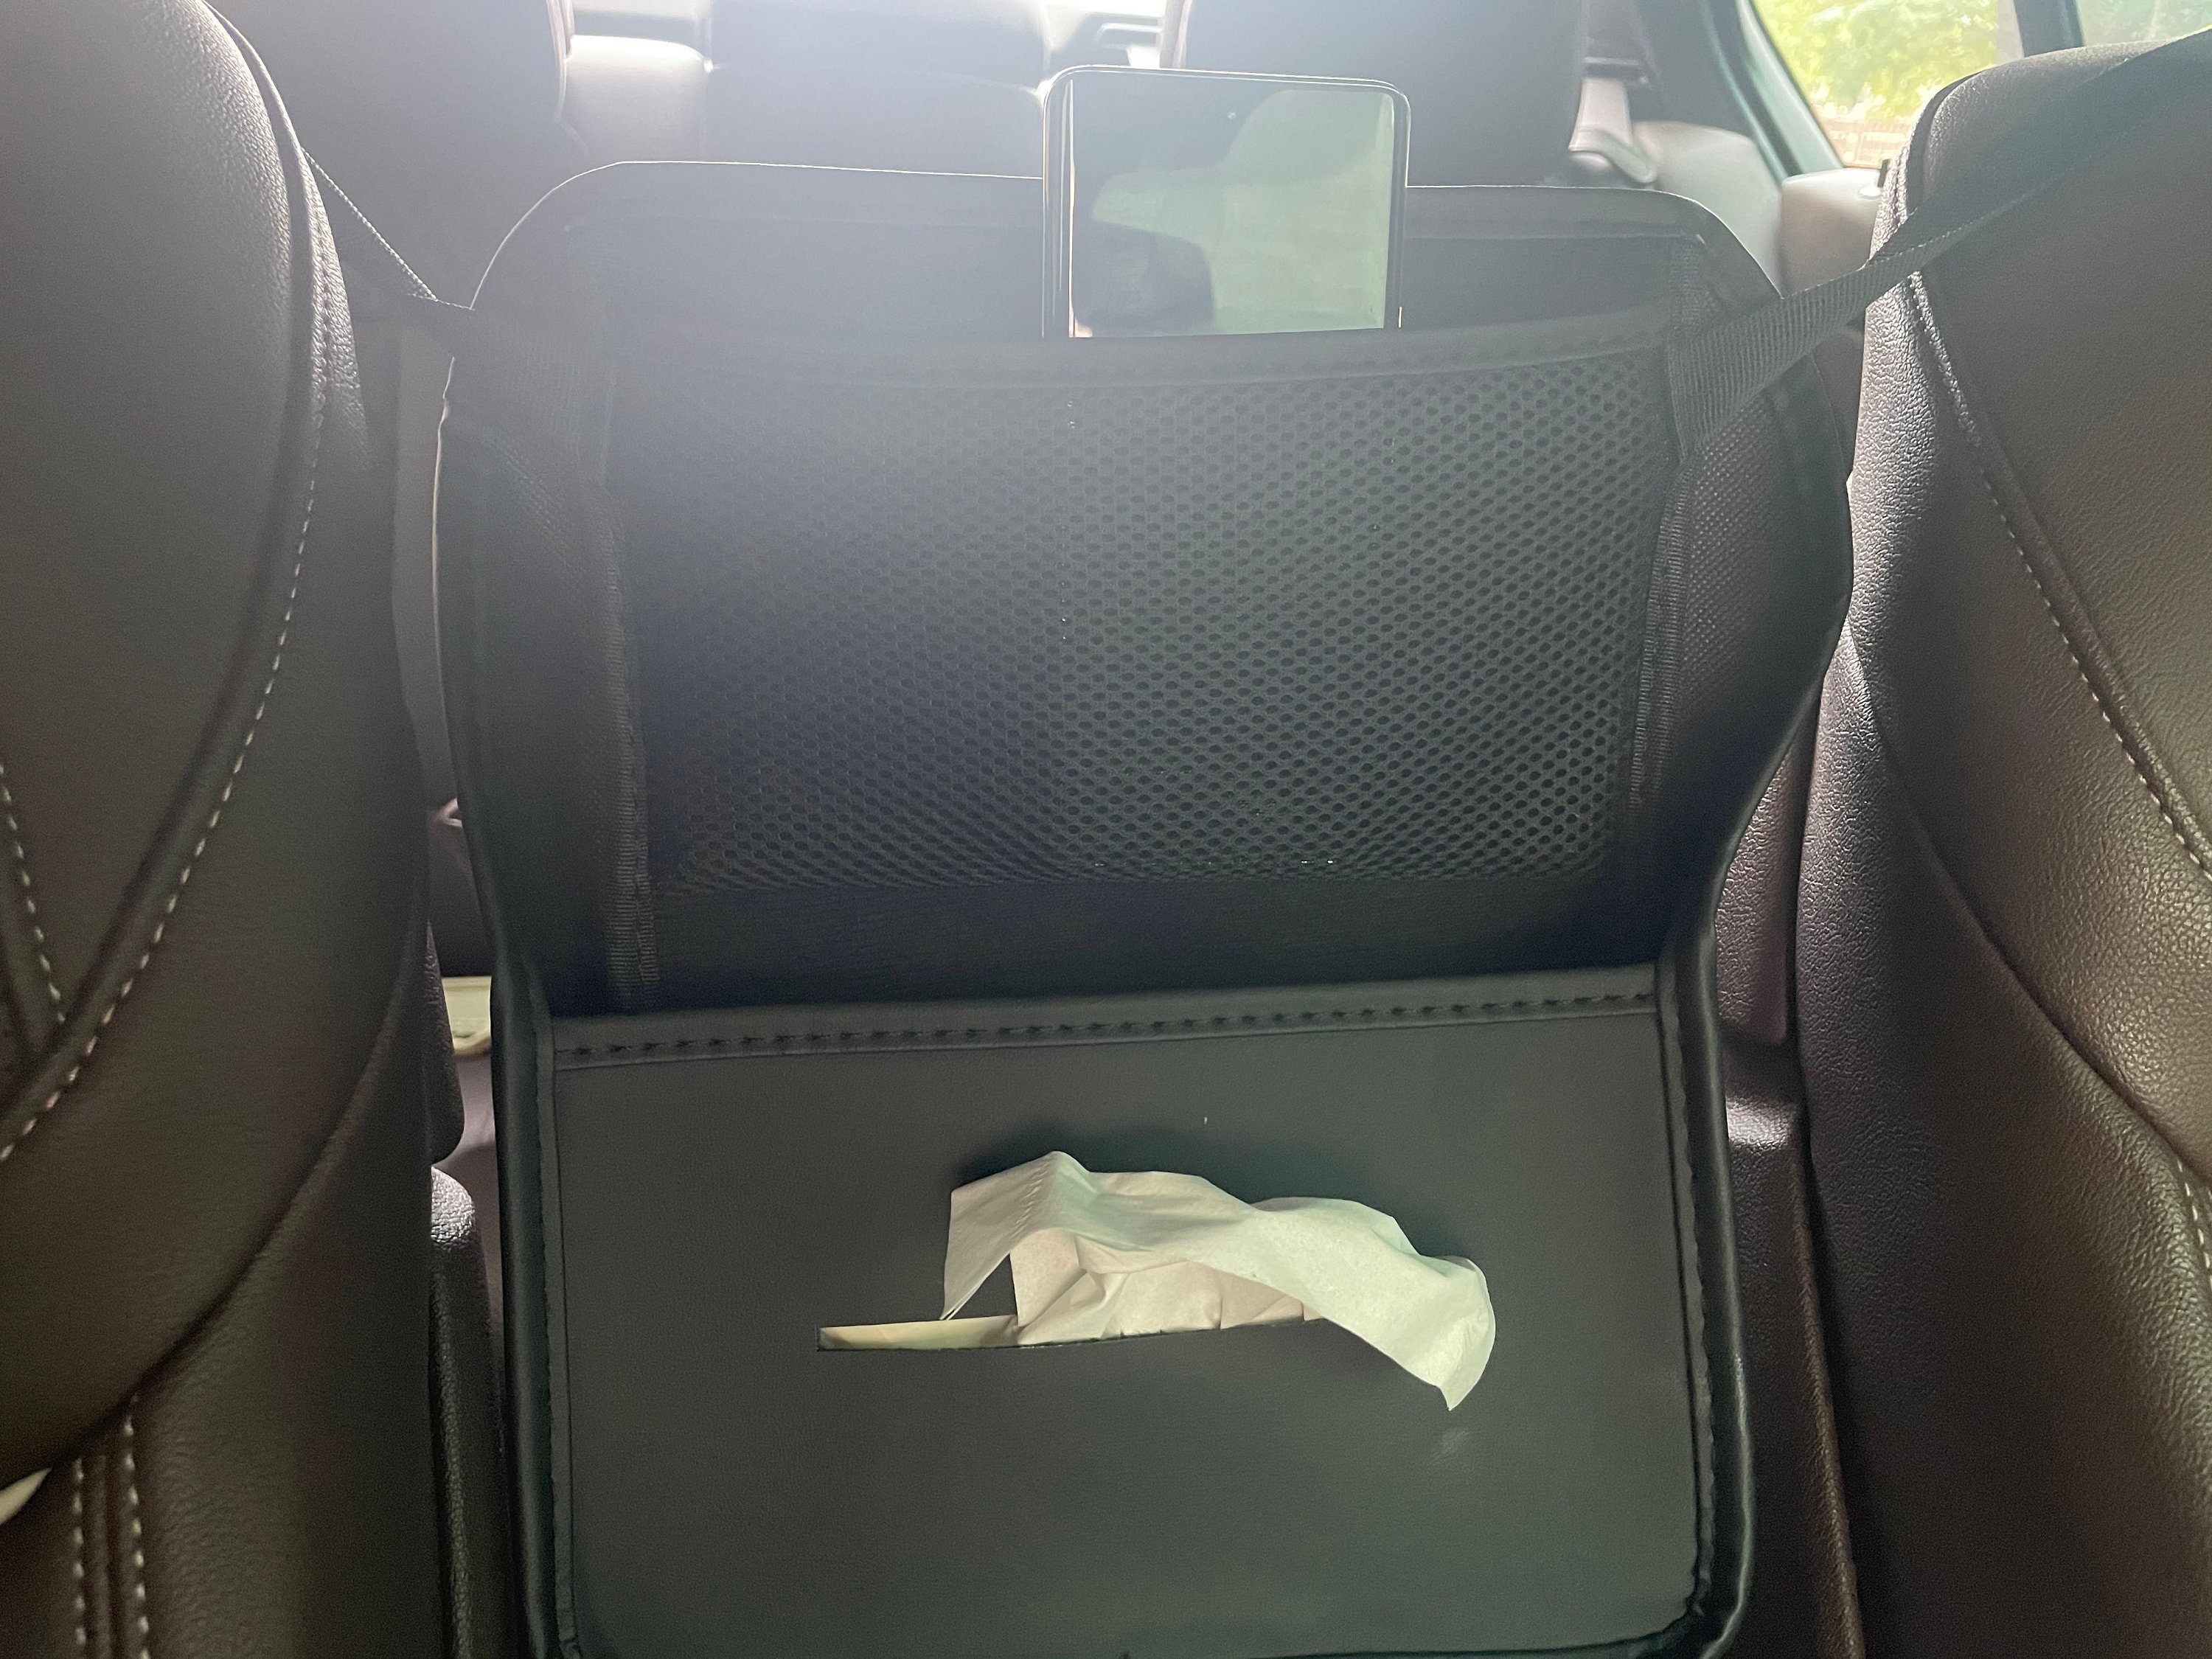 pologmase Autositz-Haken – verdeckte Kopfstützen-Auto-Taschenhaken